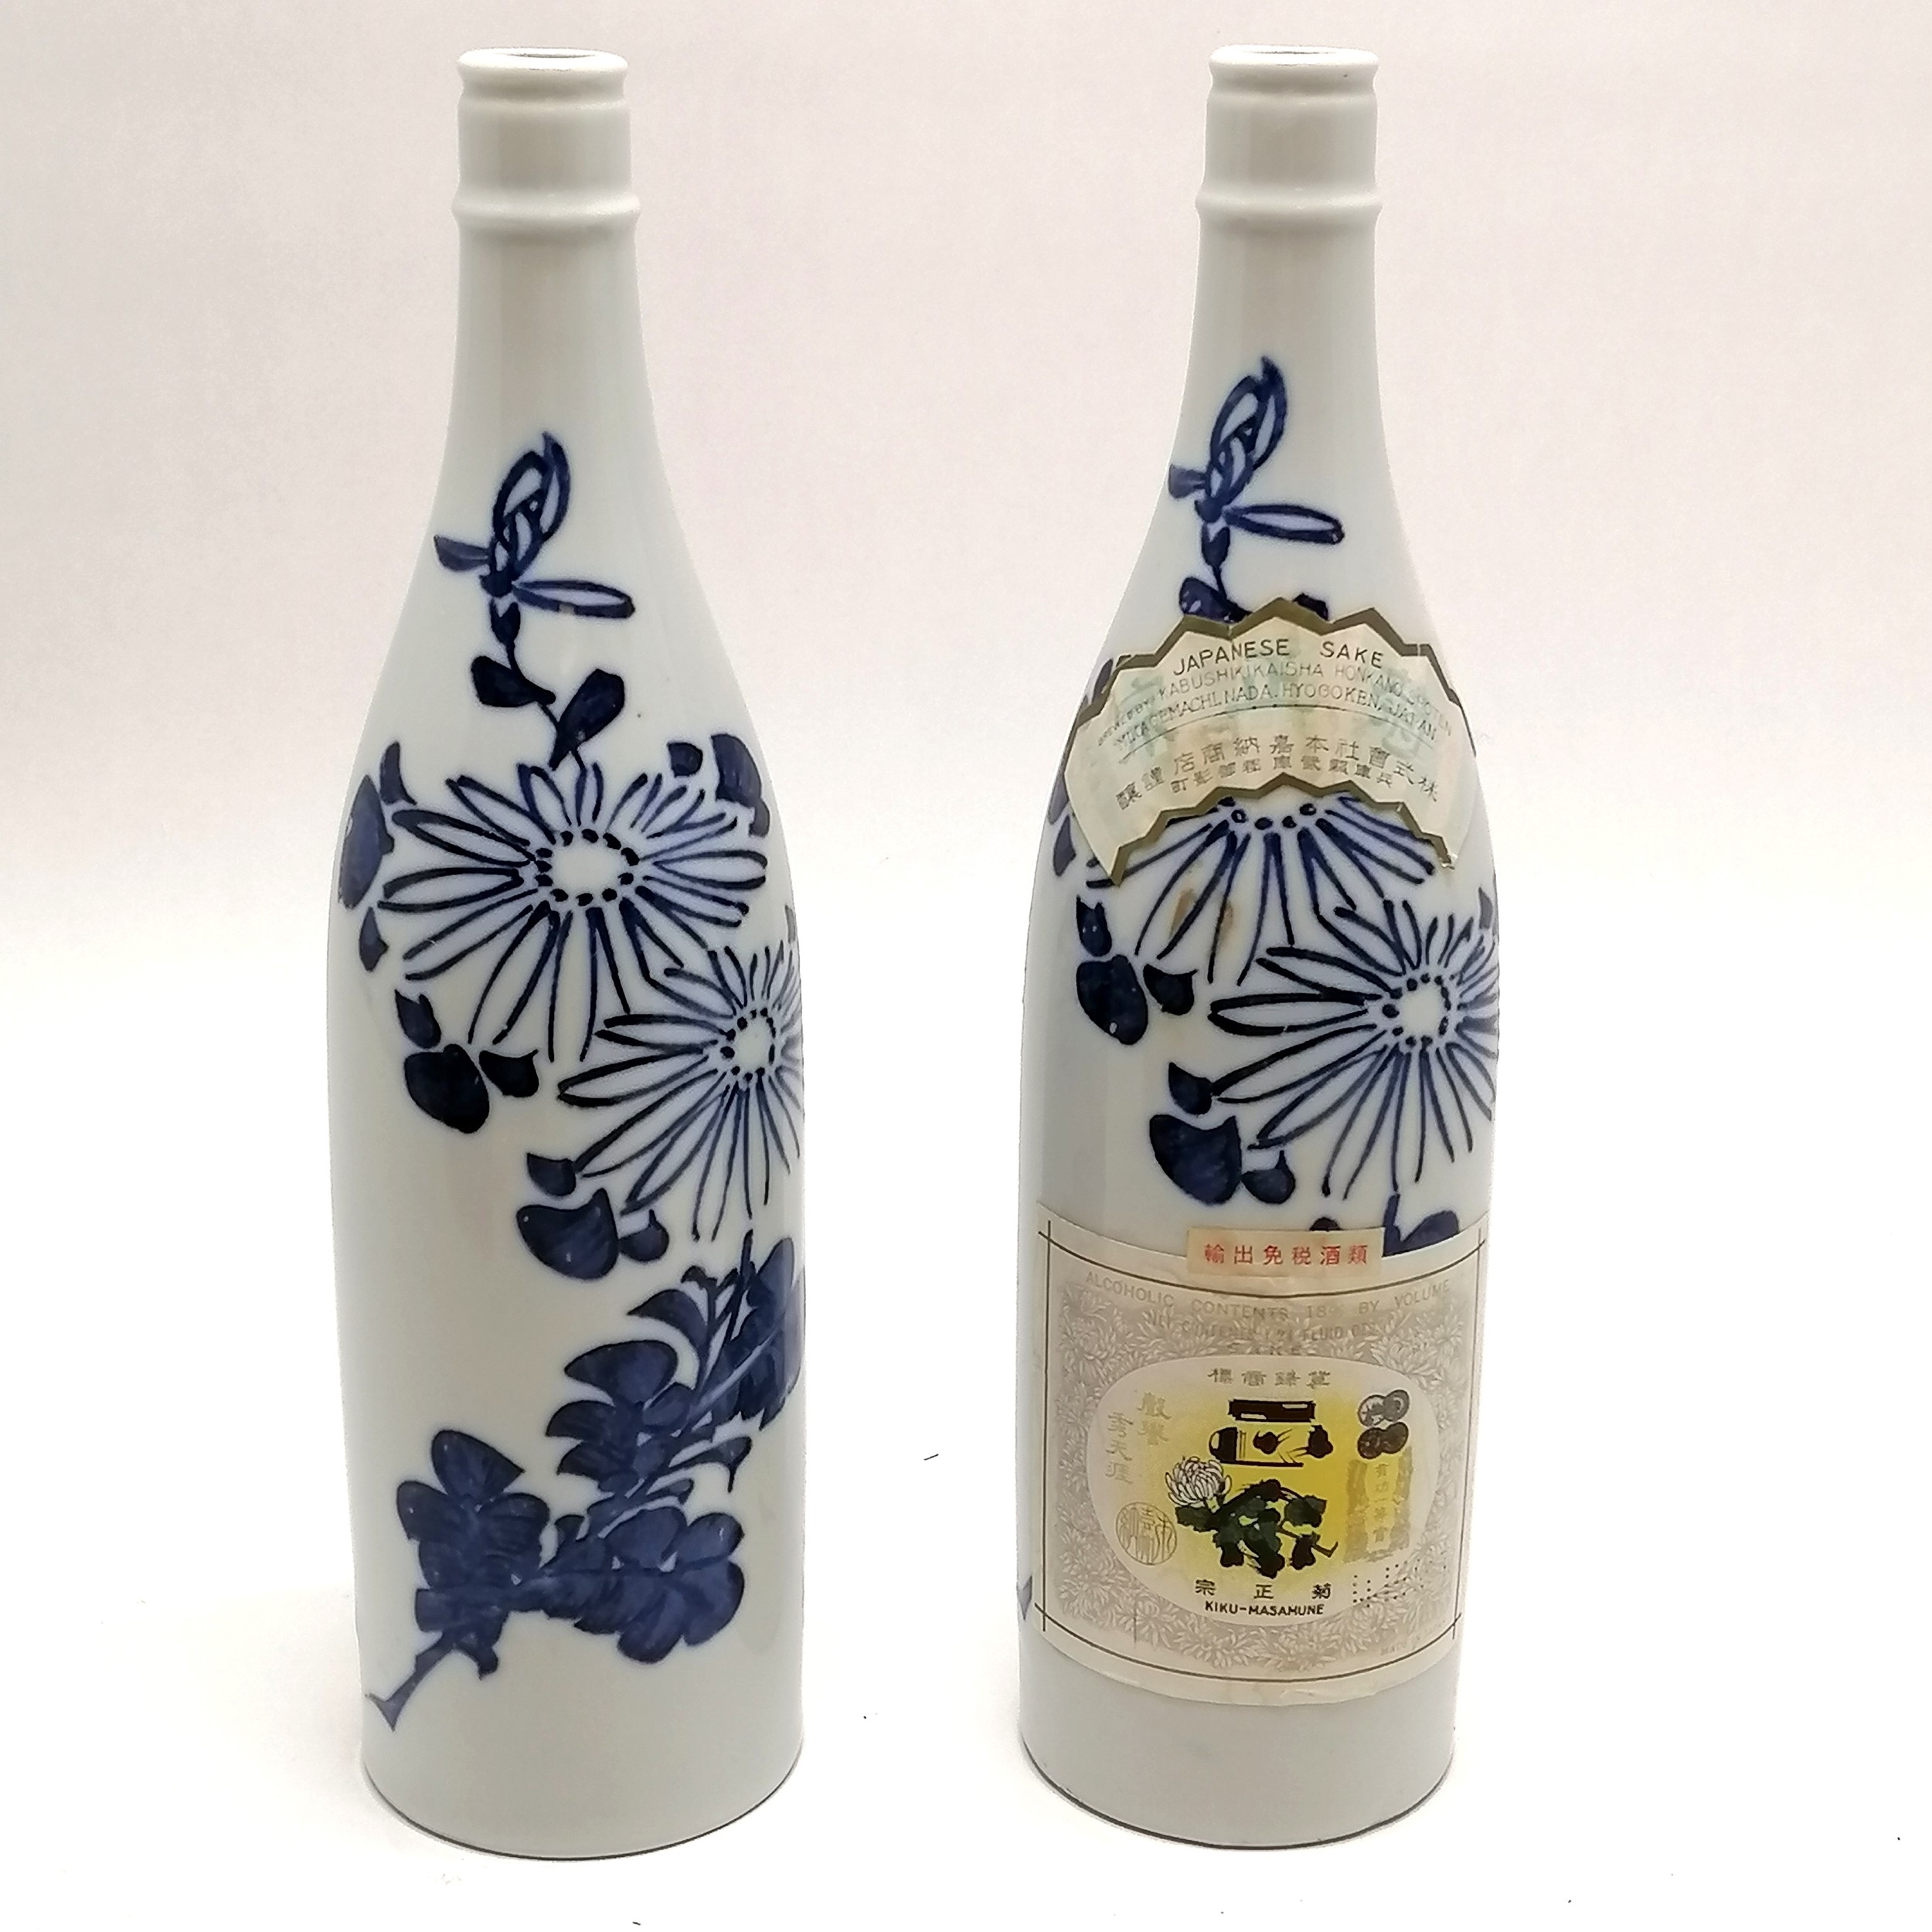 Pair of (empty) vintage Sake bottles - 1 with original label & 29cm high